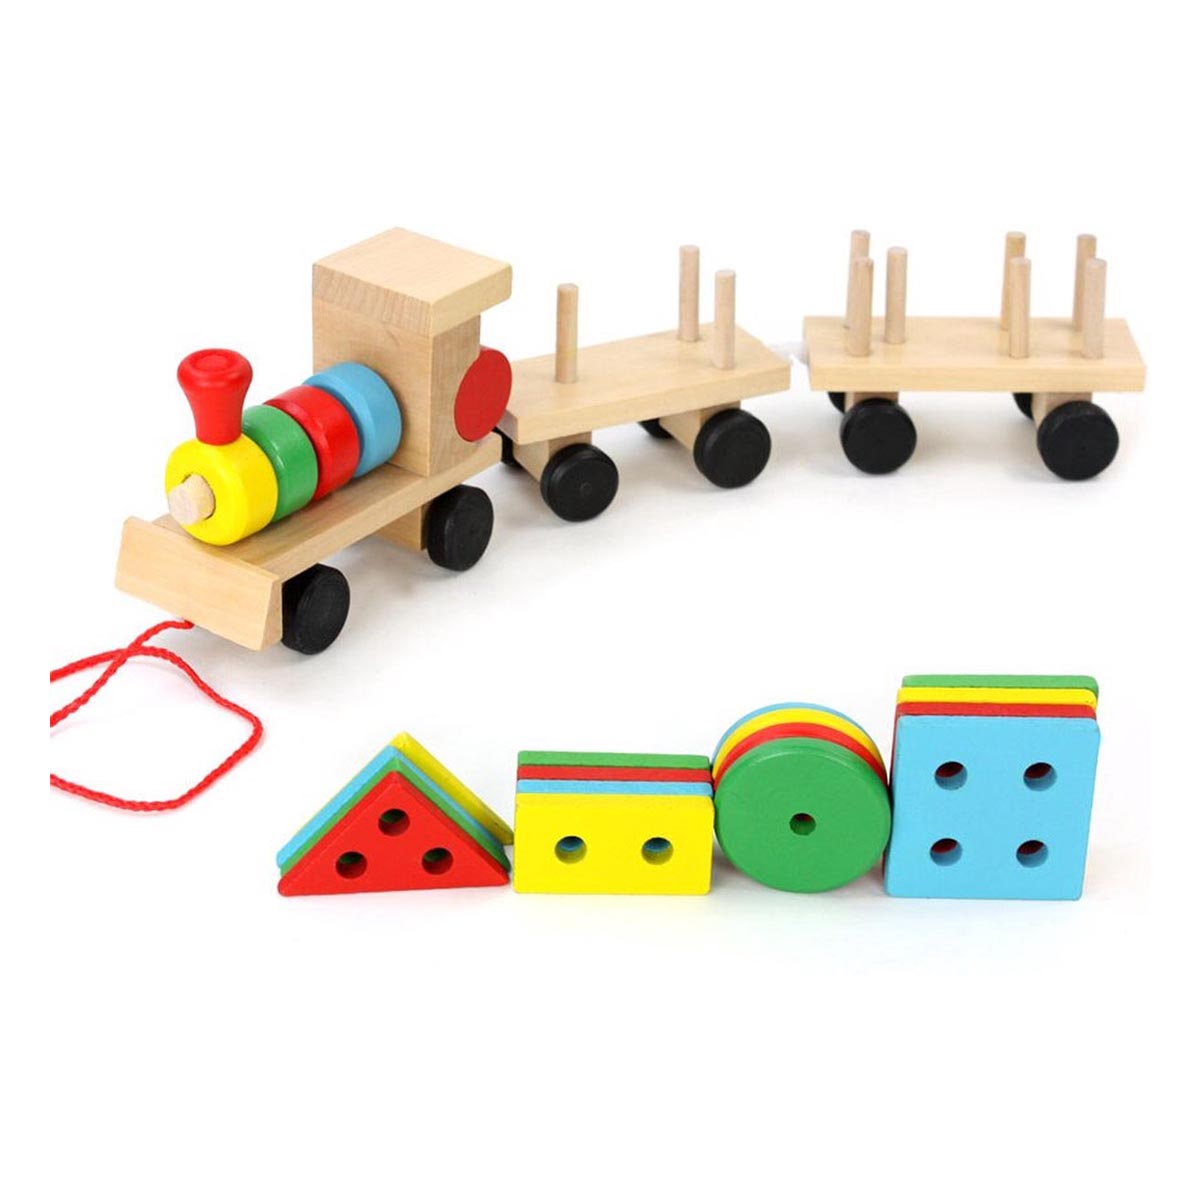 <tc>Ariko</tc> XL Wooden Train with blocks and shapes - Block train - Toy train - Education with shapes and colors -